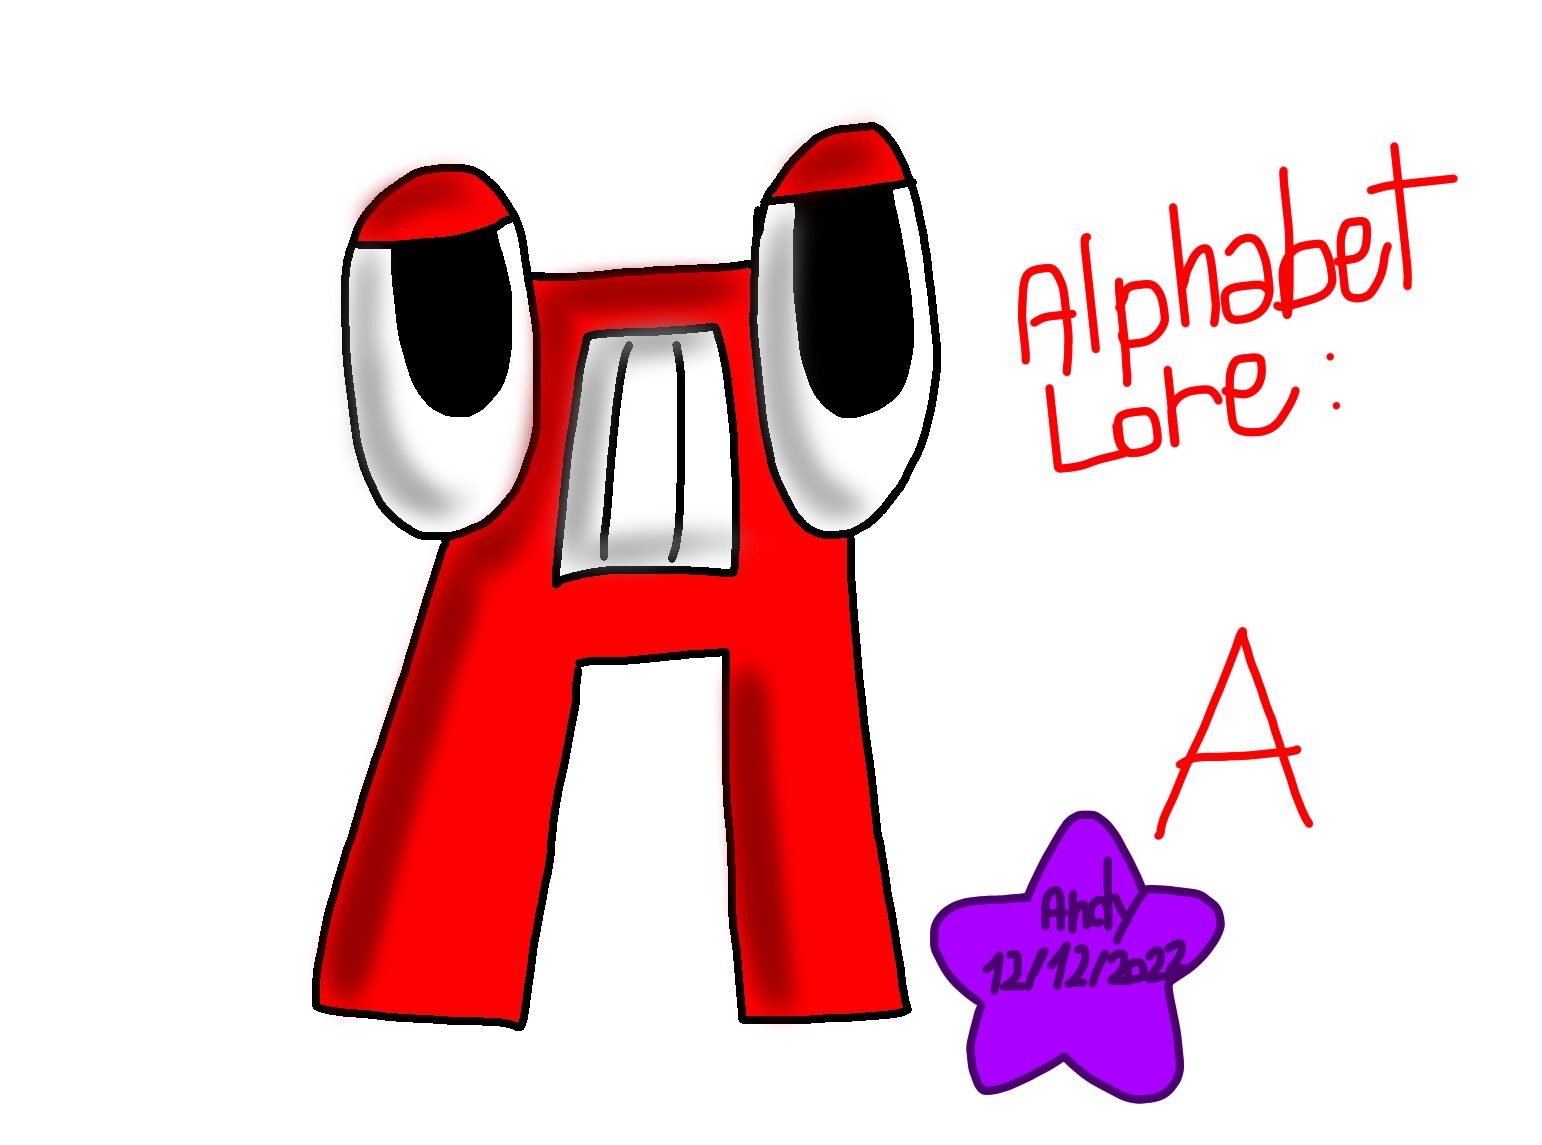 Alphabet Lore (2022)